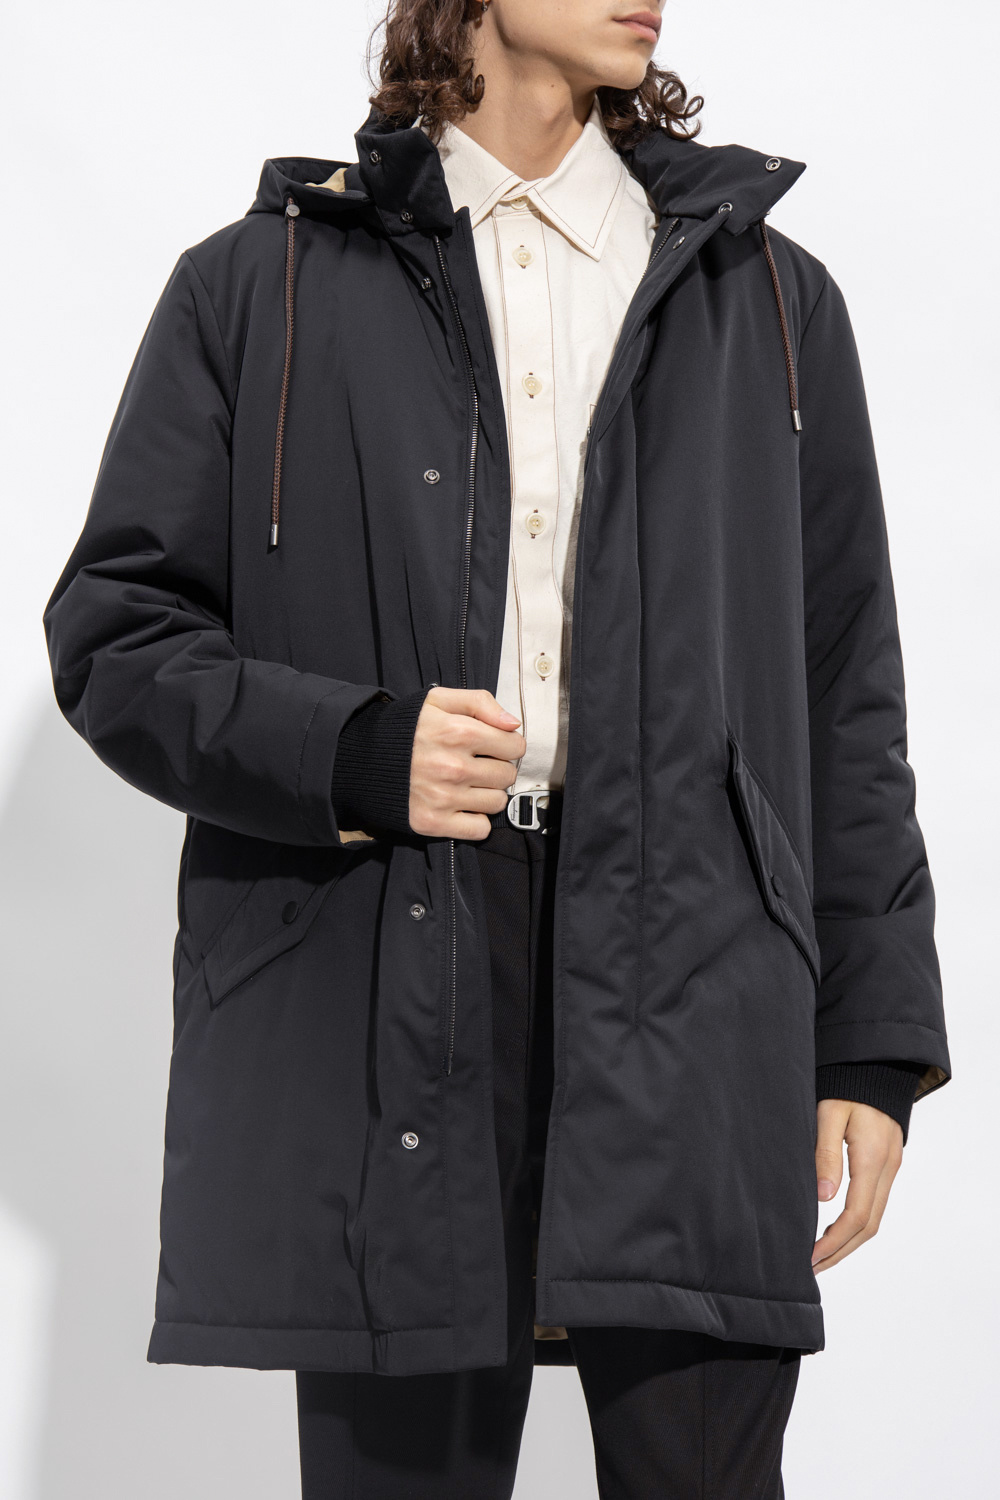 Salvatore Ferragamo Double-layered jacket